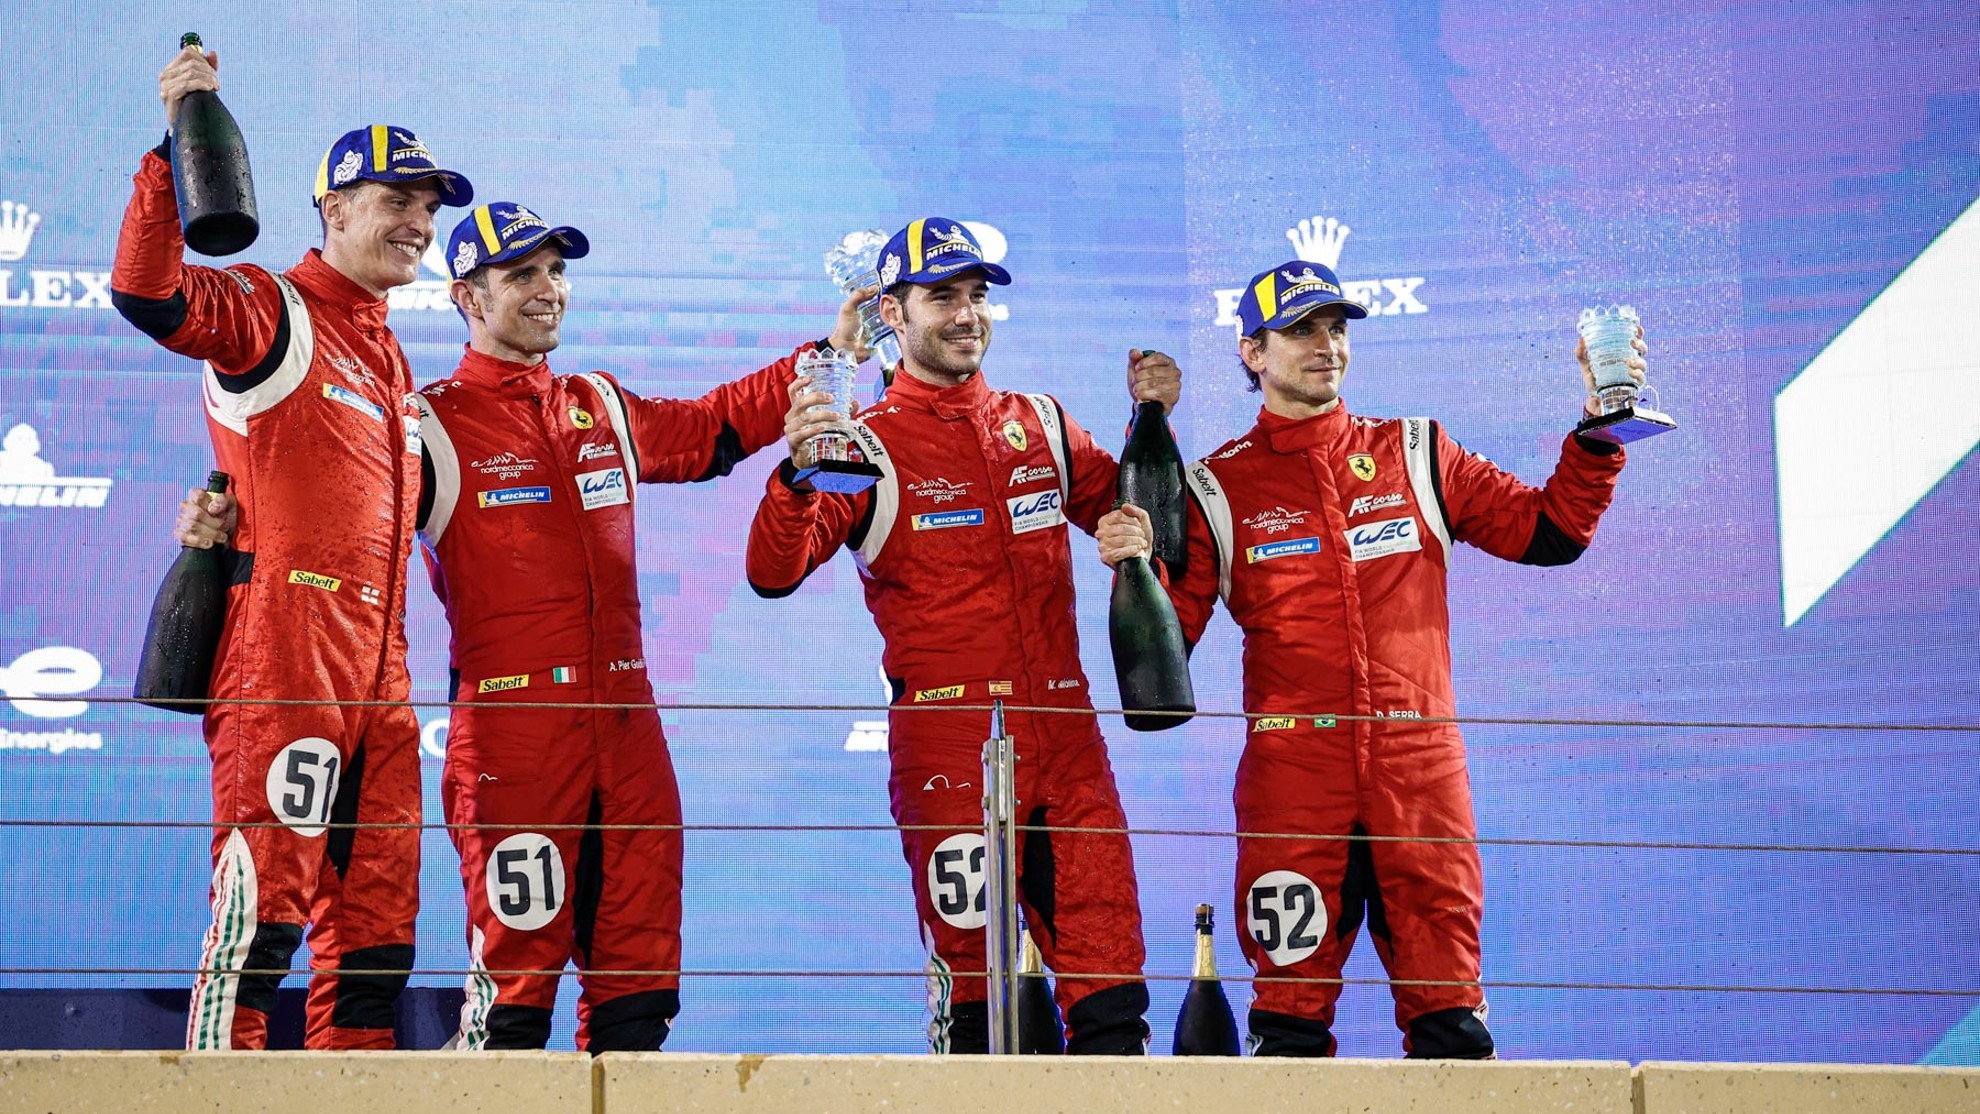 8 horas de barein - 8 hours bahrain - Ferrari campeon - protesta - Pier Guidi - James Calado